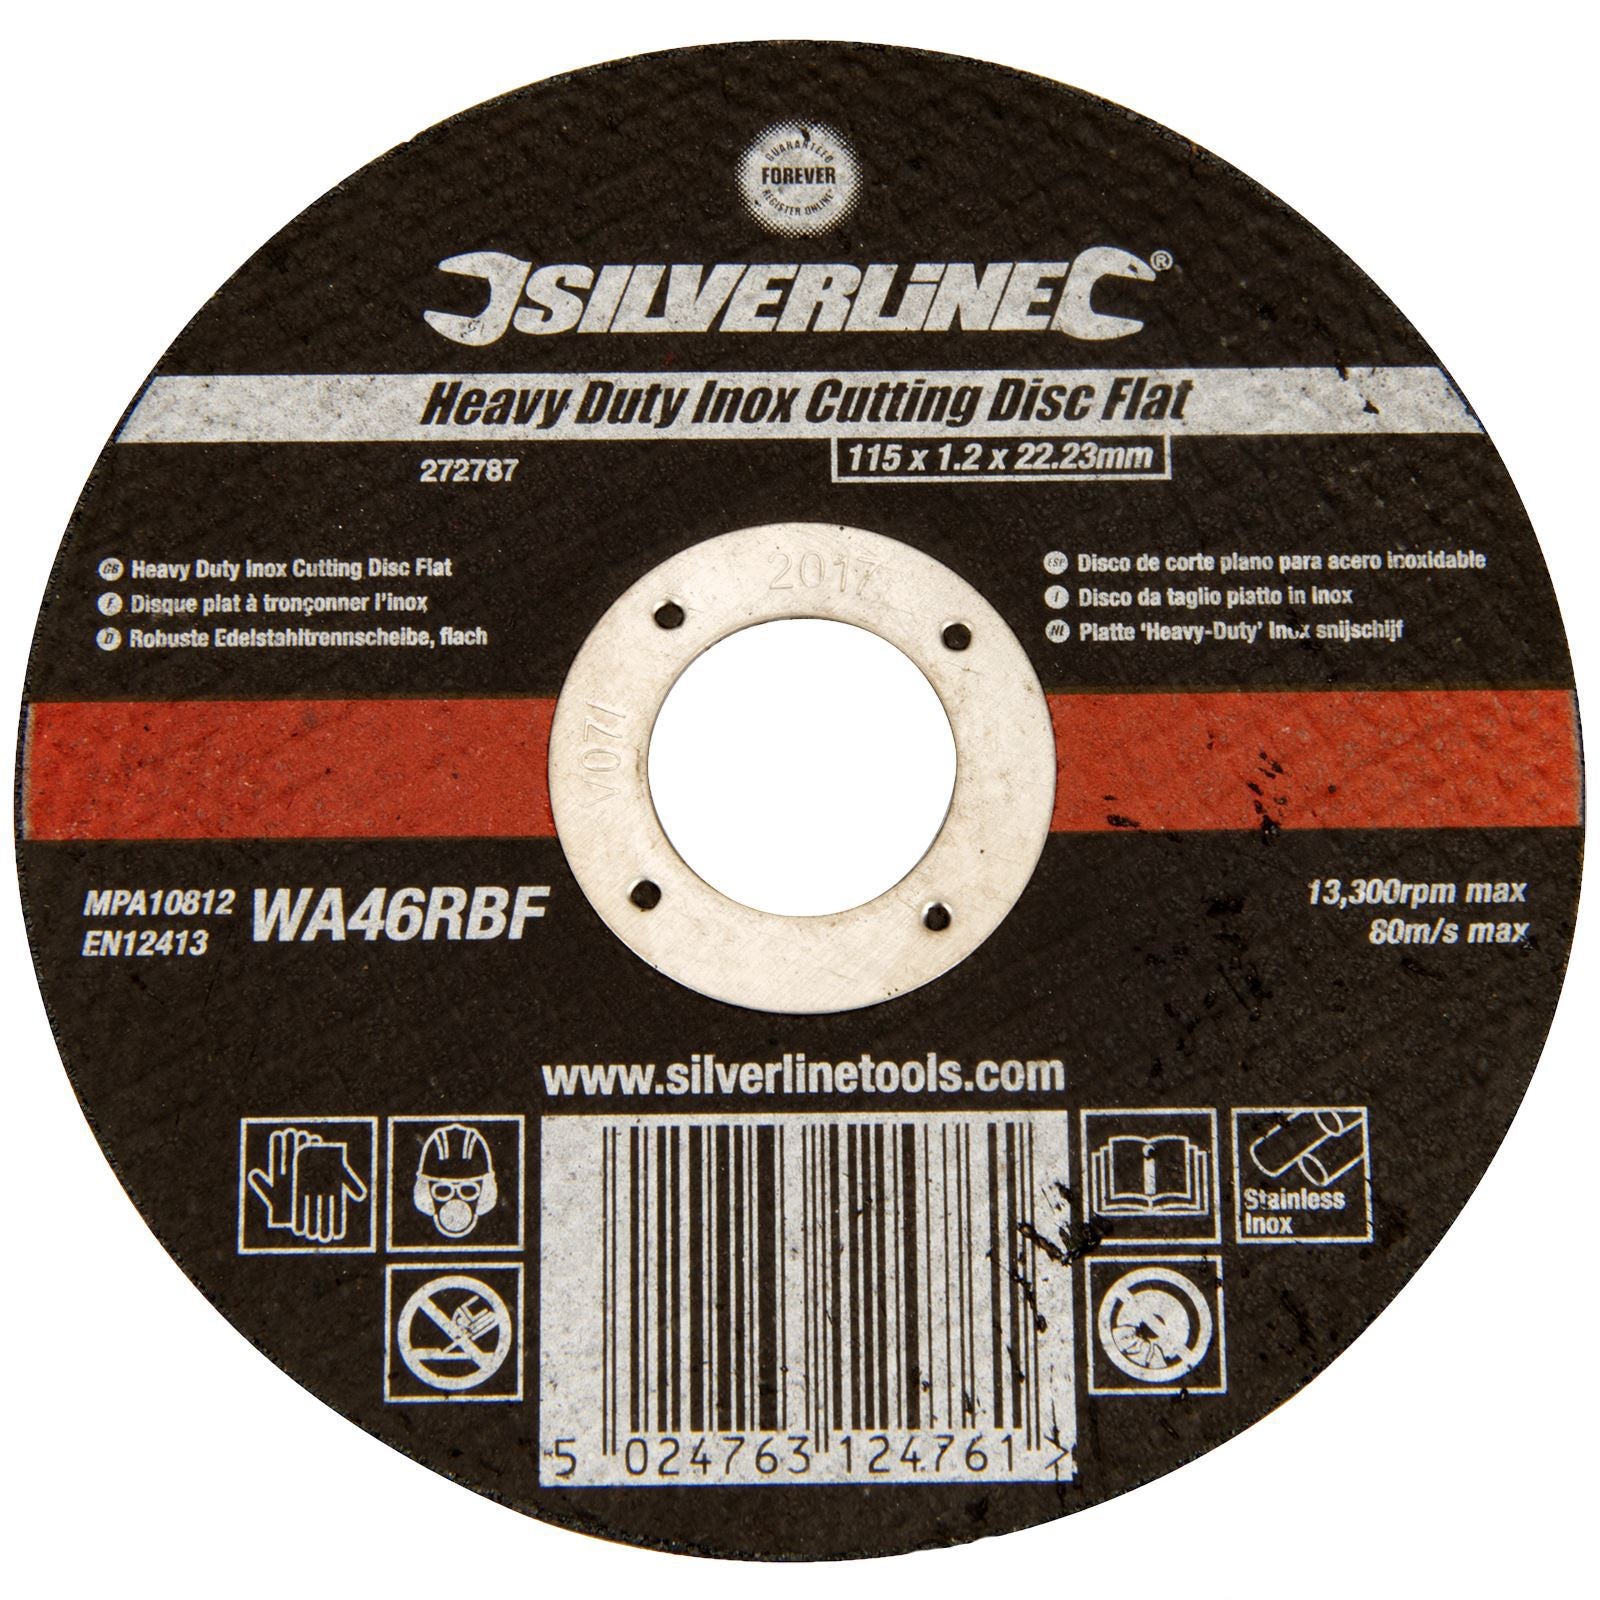 Silverline Heavy Duty Flat Inox Slitting Disc 115 x 1.2 x 22.23mm